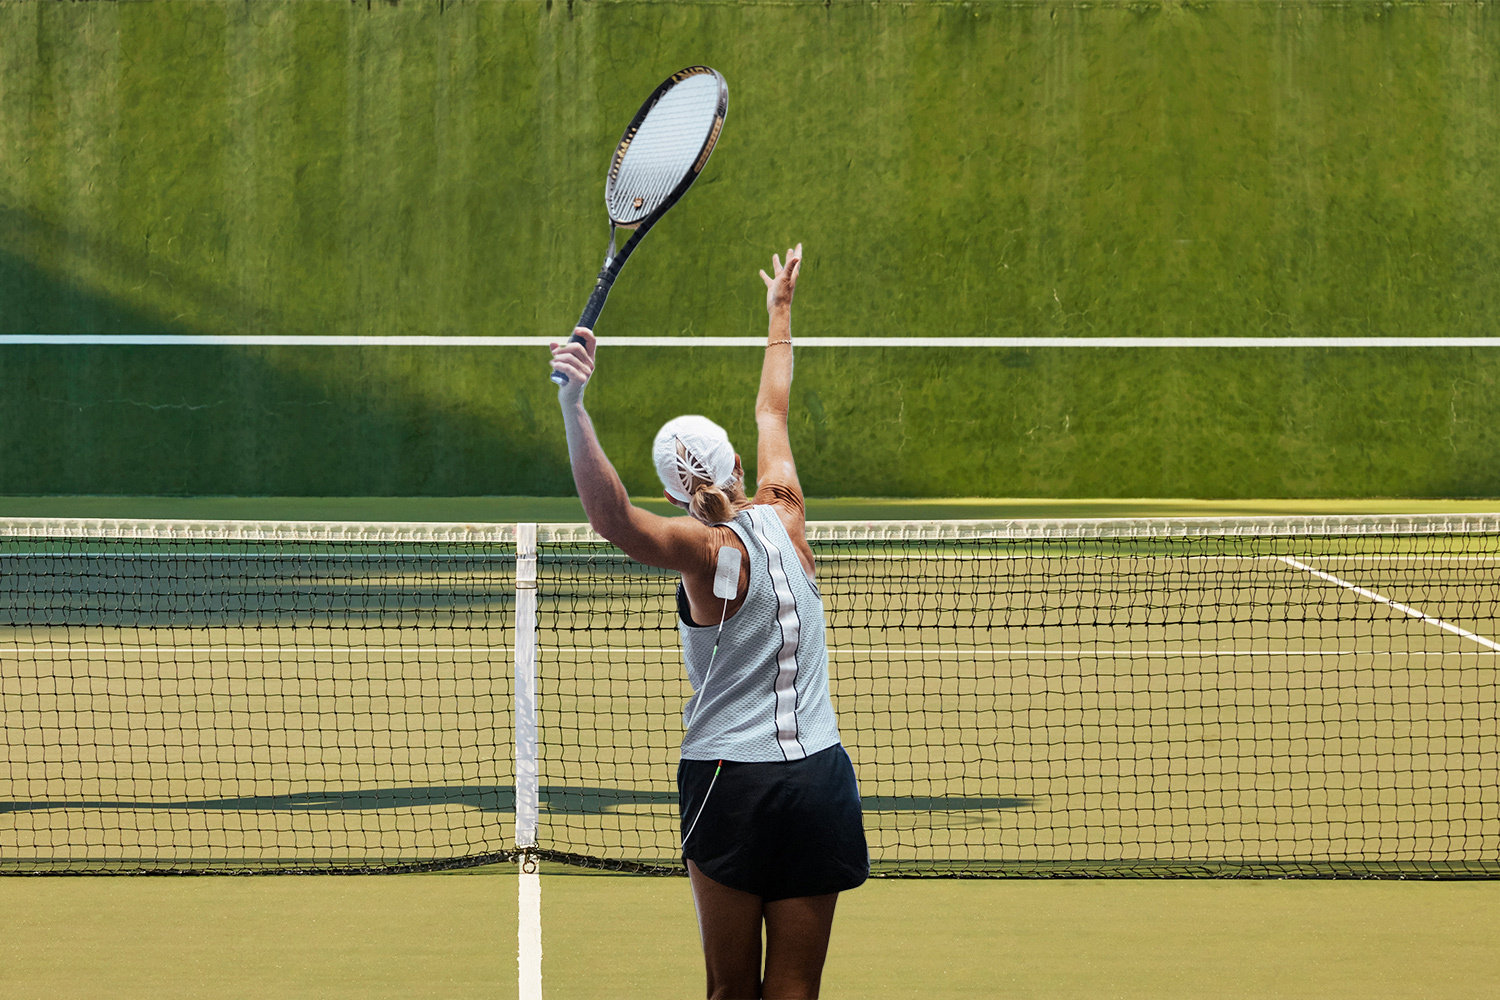 A photo of a woman preparing to serve a tennis ball.